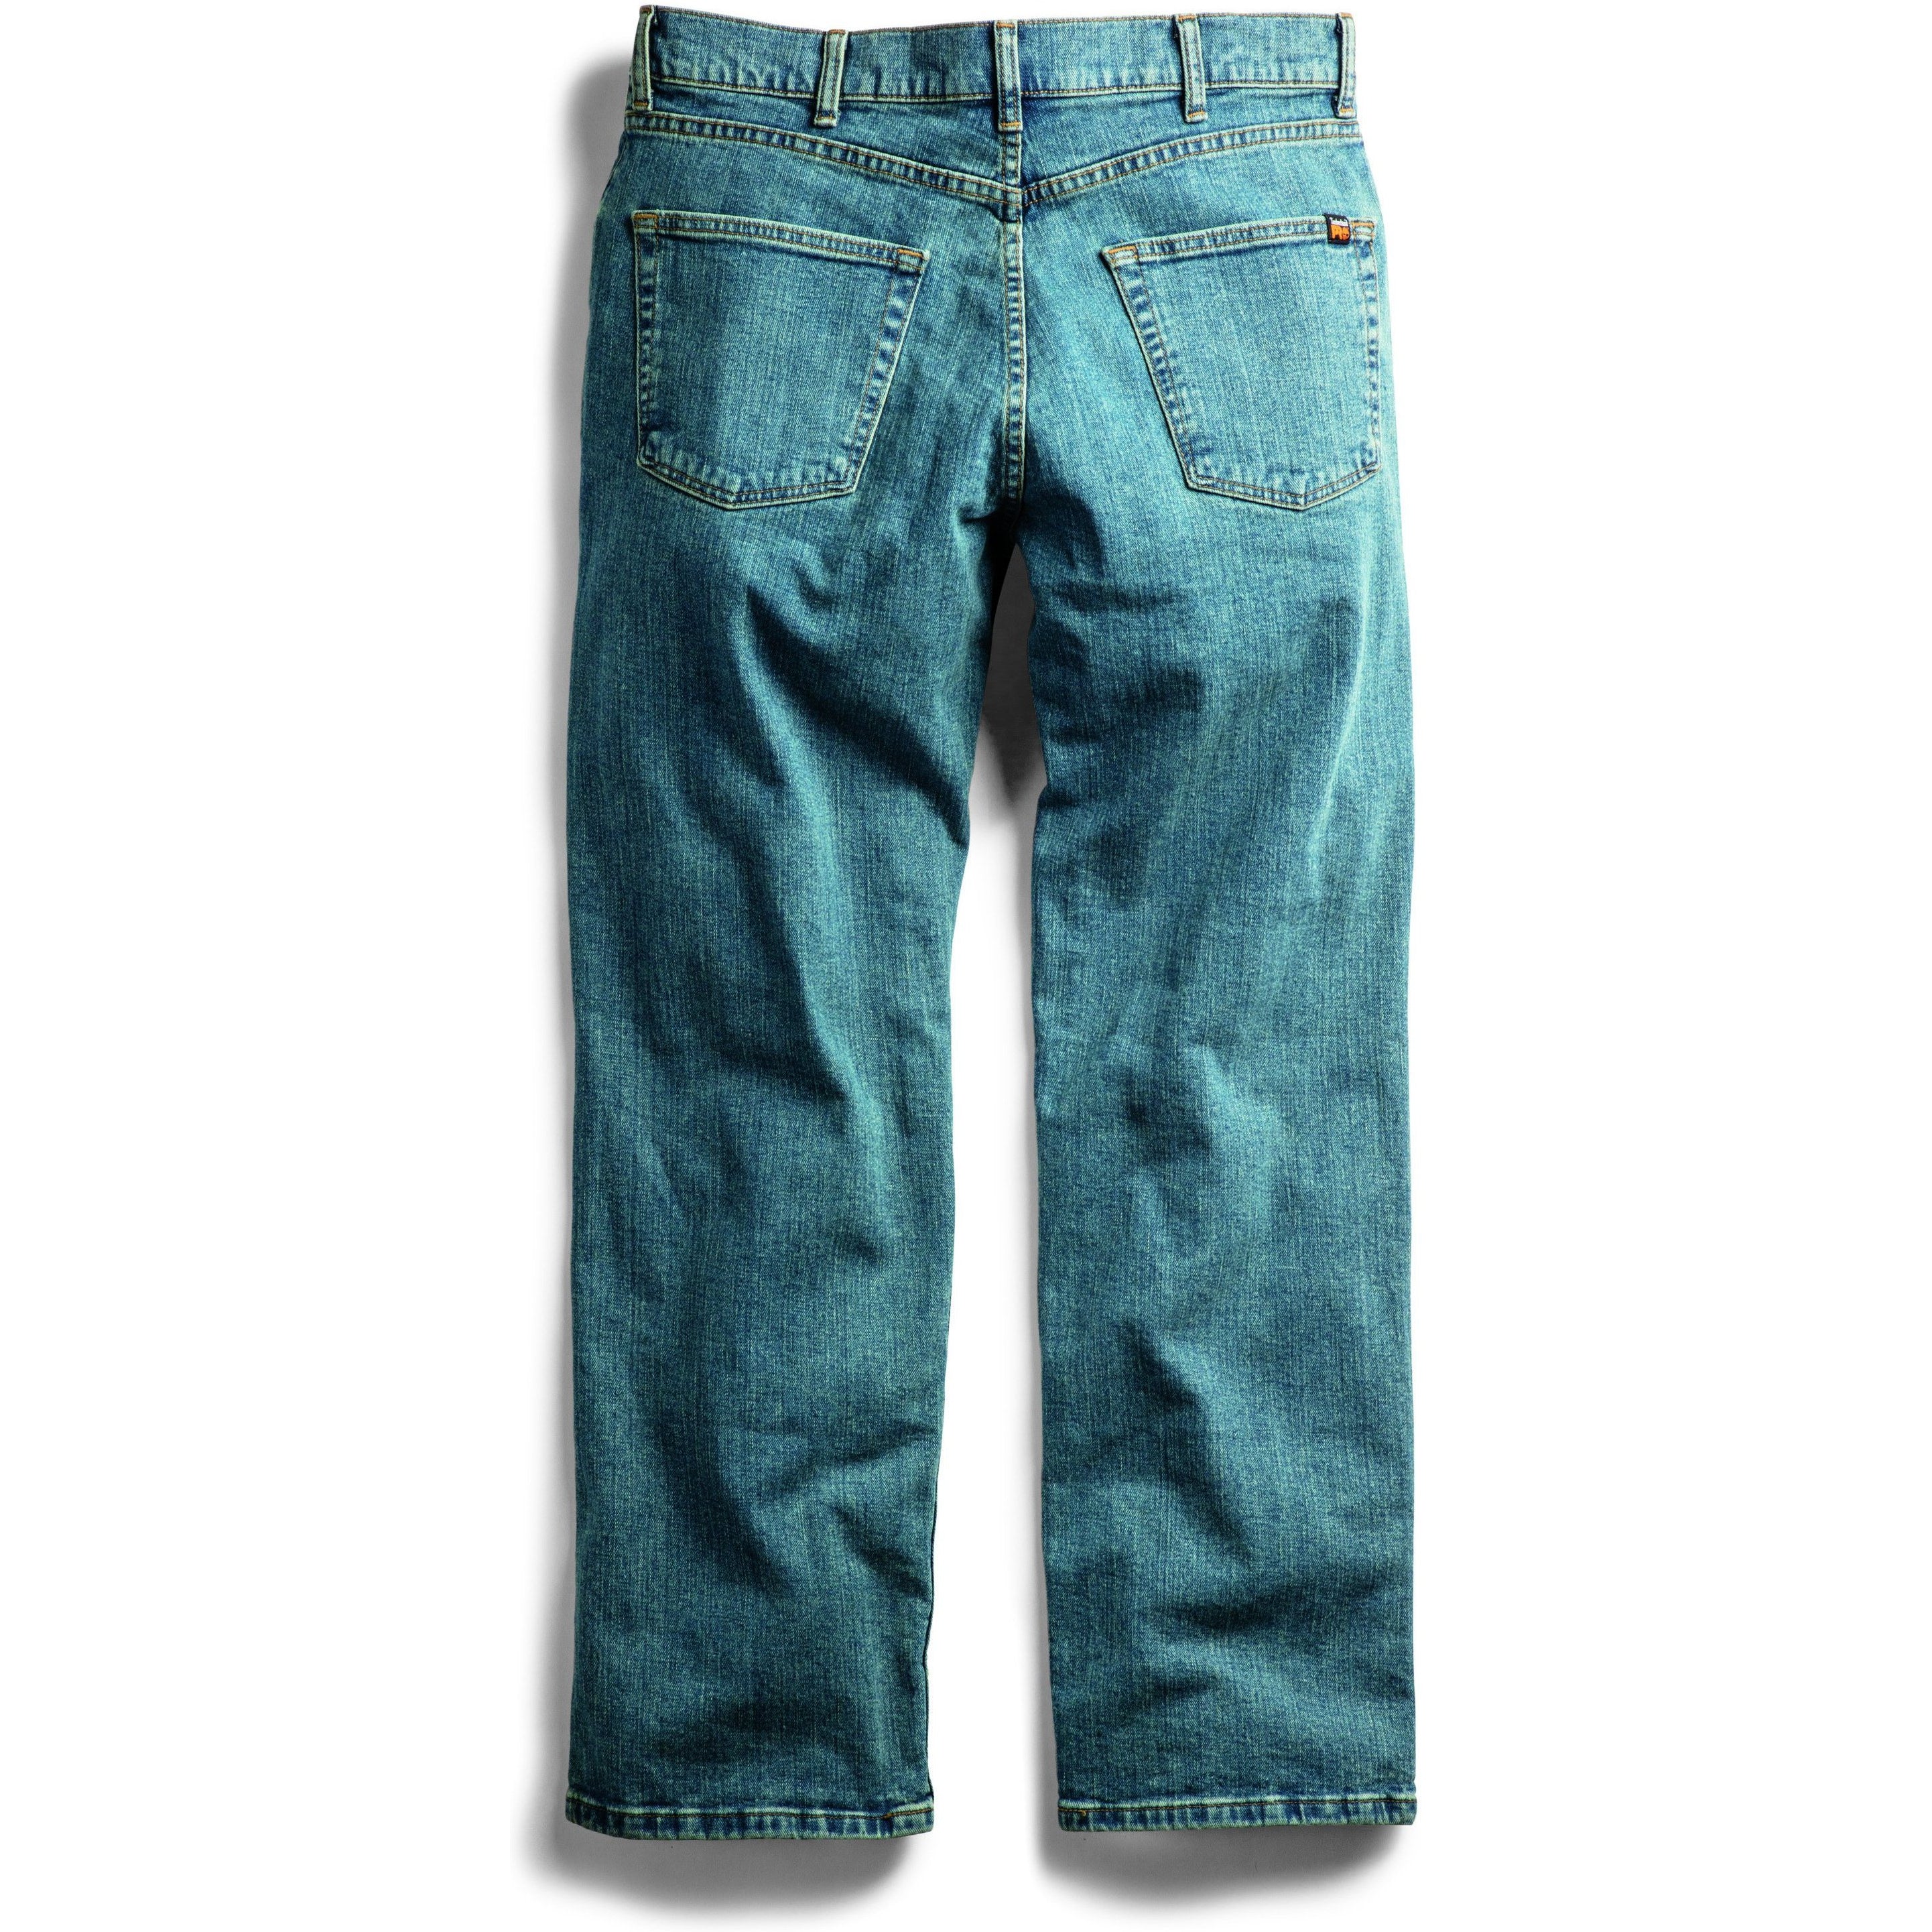 Timberland Pro Men's Grit N Grind Flex Denim Work Jeans - Straight Fit TB0A1V55B88  - Overlook Boots